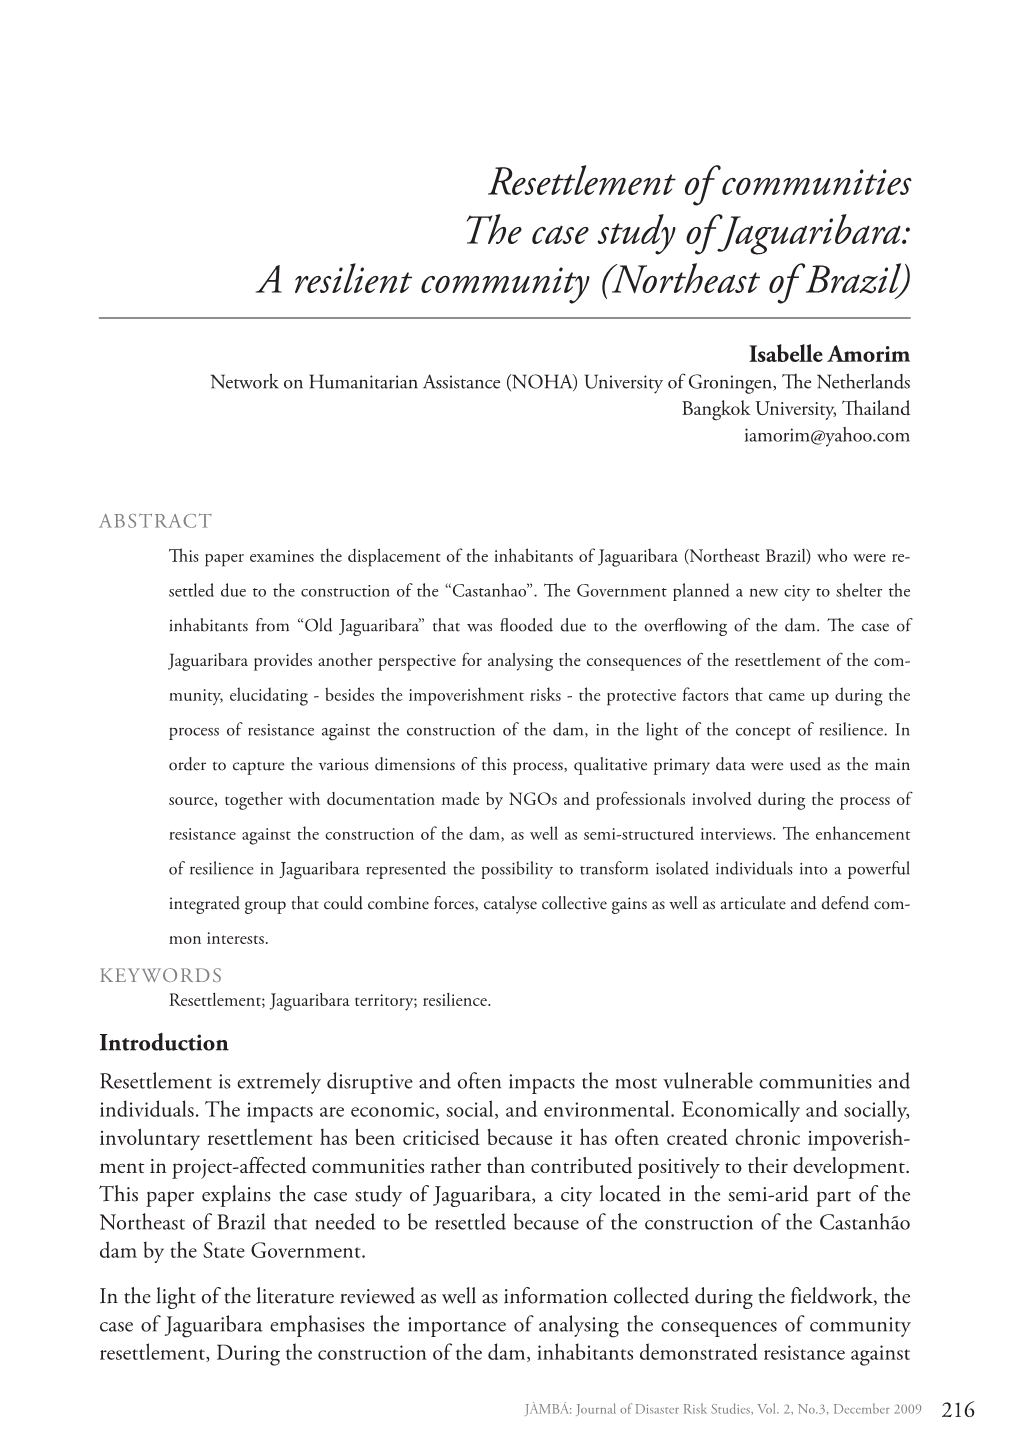 Resettlement of Communities the Case Study of Jaguaribara: a Resilient Community (Northeast of Brazil)